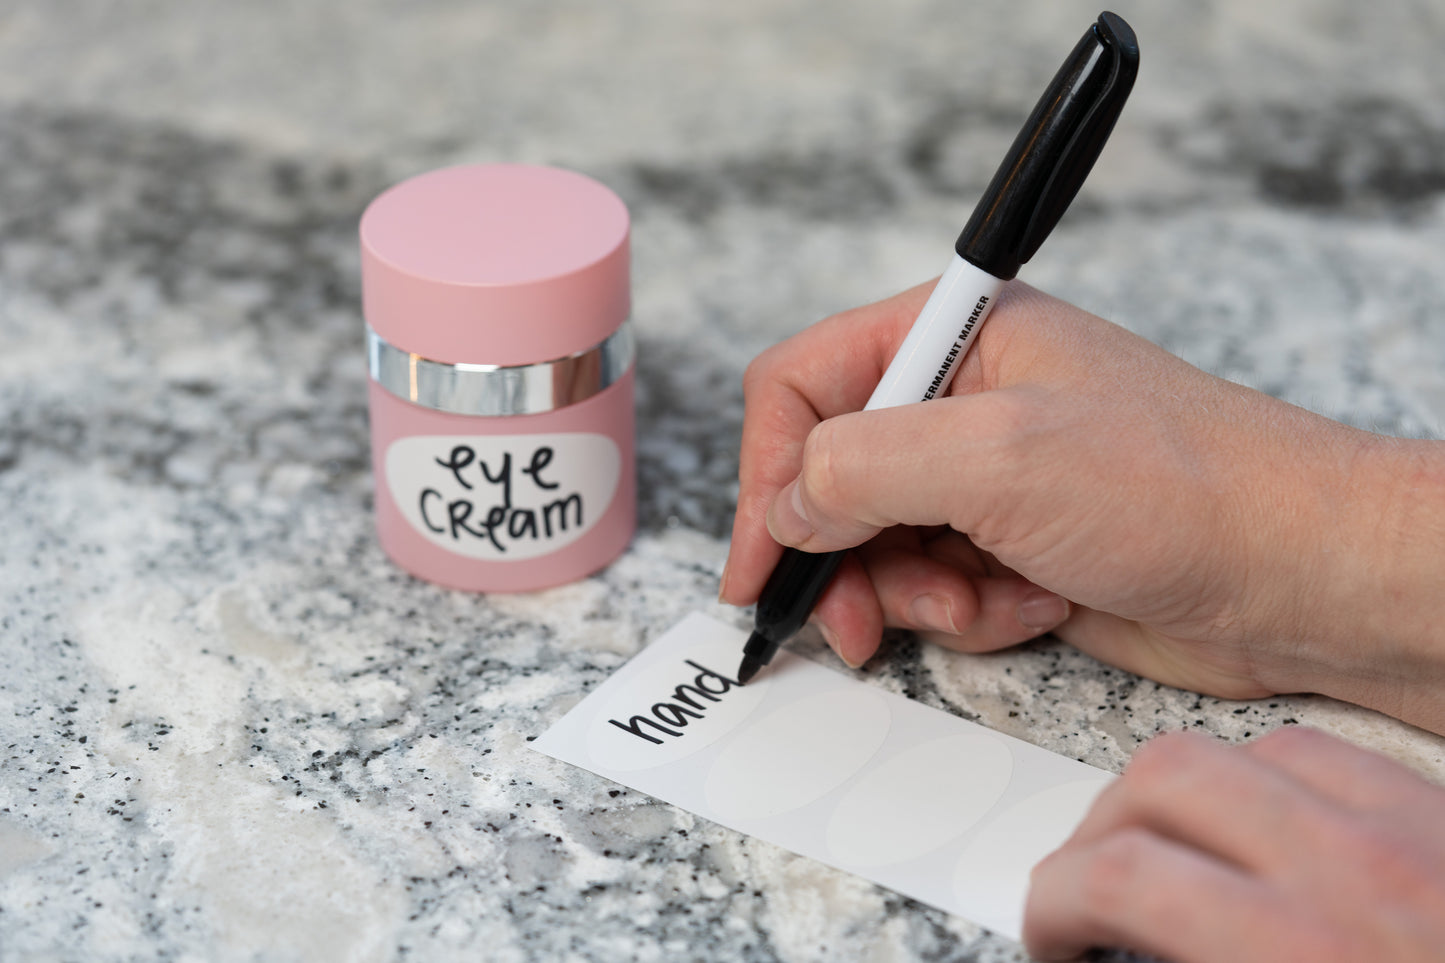 Pink Airless Pump Travel Jar - 1 oz 30 mL Refillable Empty Cosmetic Cream Jar for Moisturizer - TSA Approved